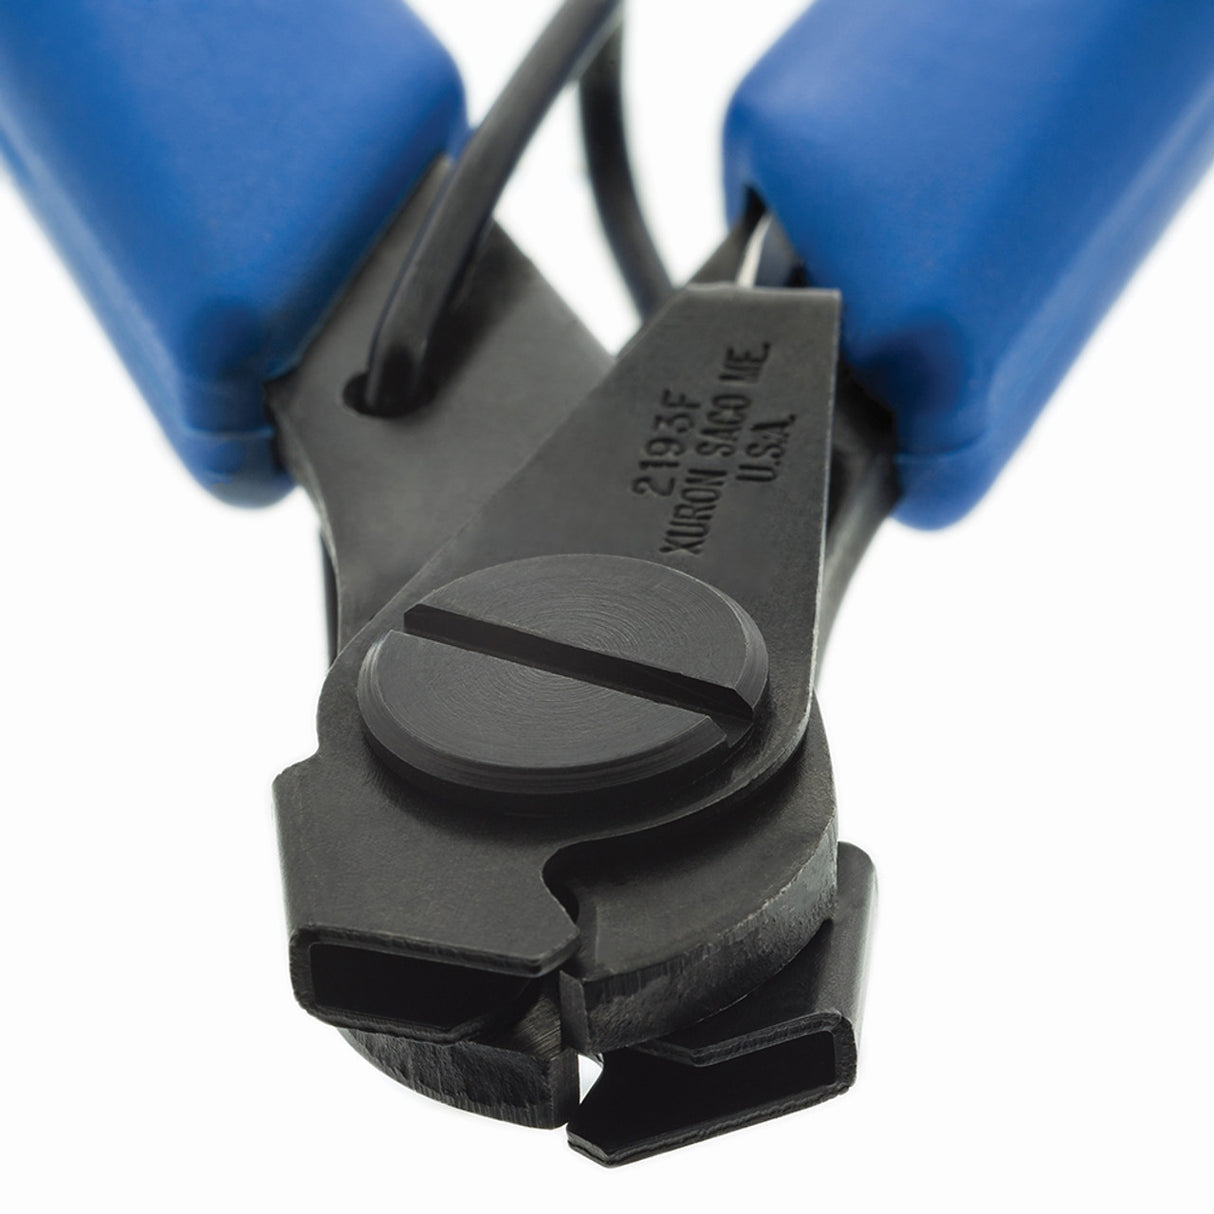 Xuron® 2193F Hard Wire Cutter